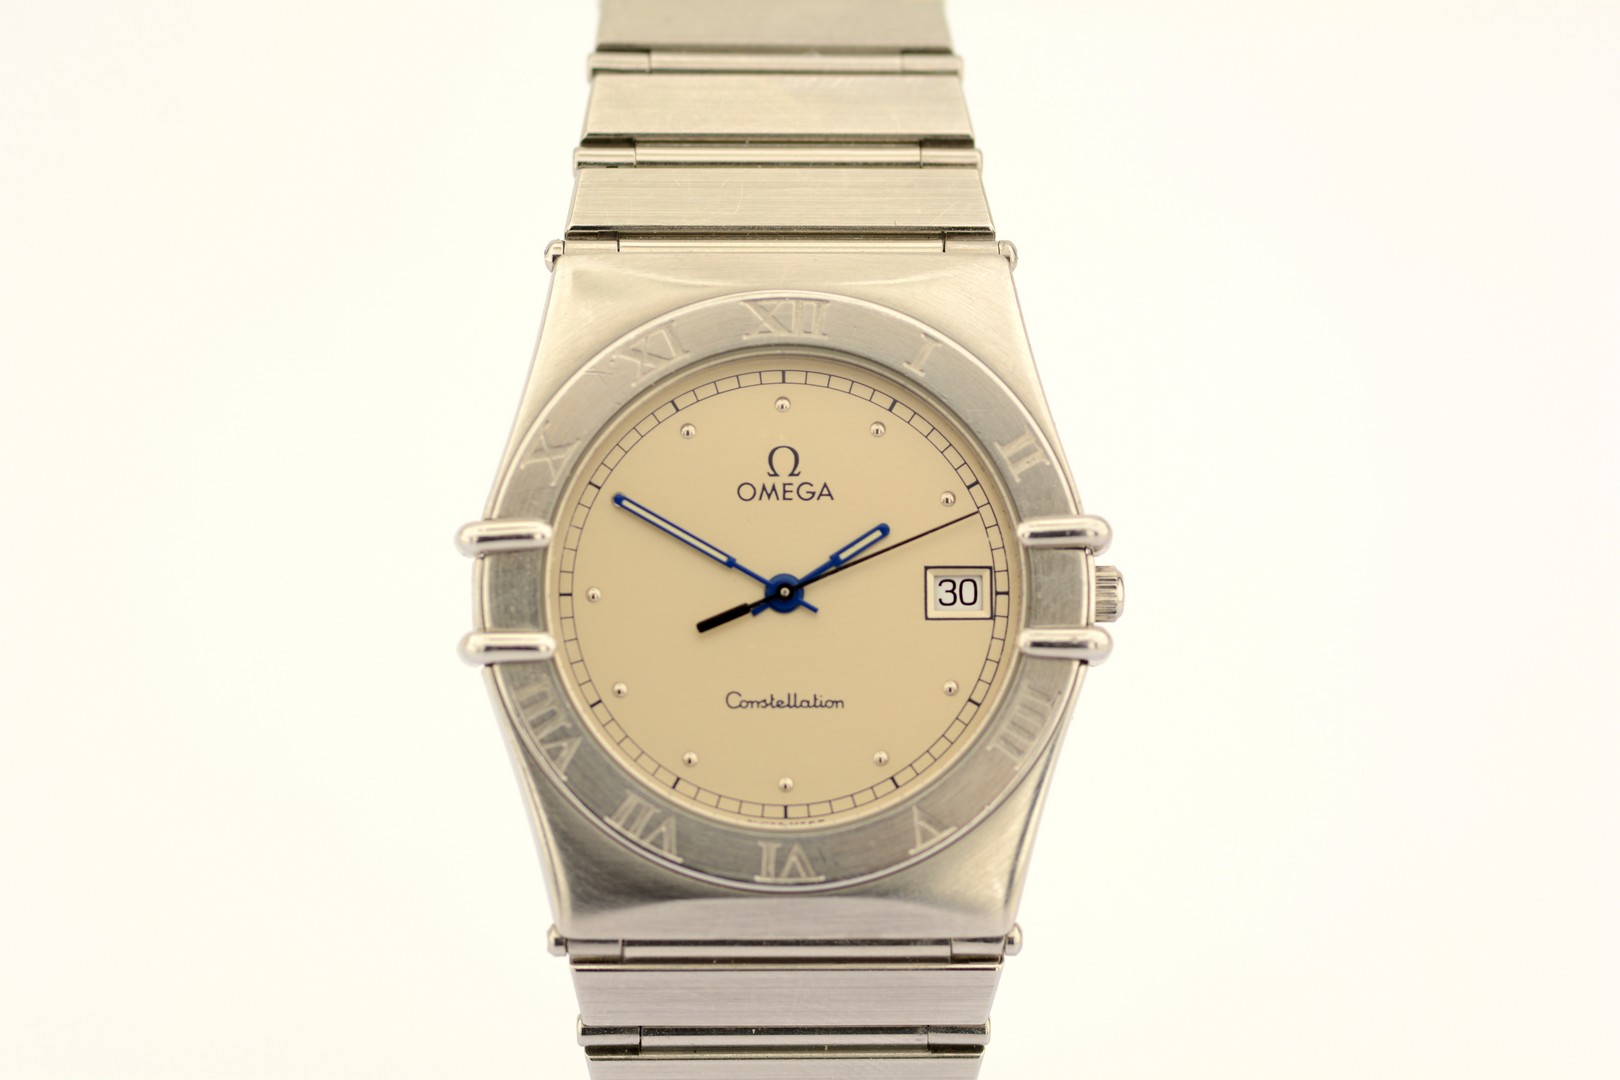 Omega / 1987 Constellation Perfect Condition - Gentlemen's Steel Wristwatch - Image 3 of 9